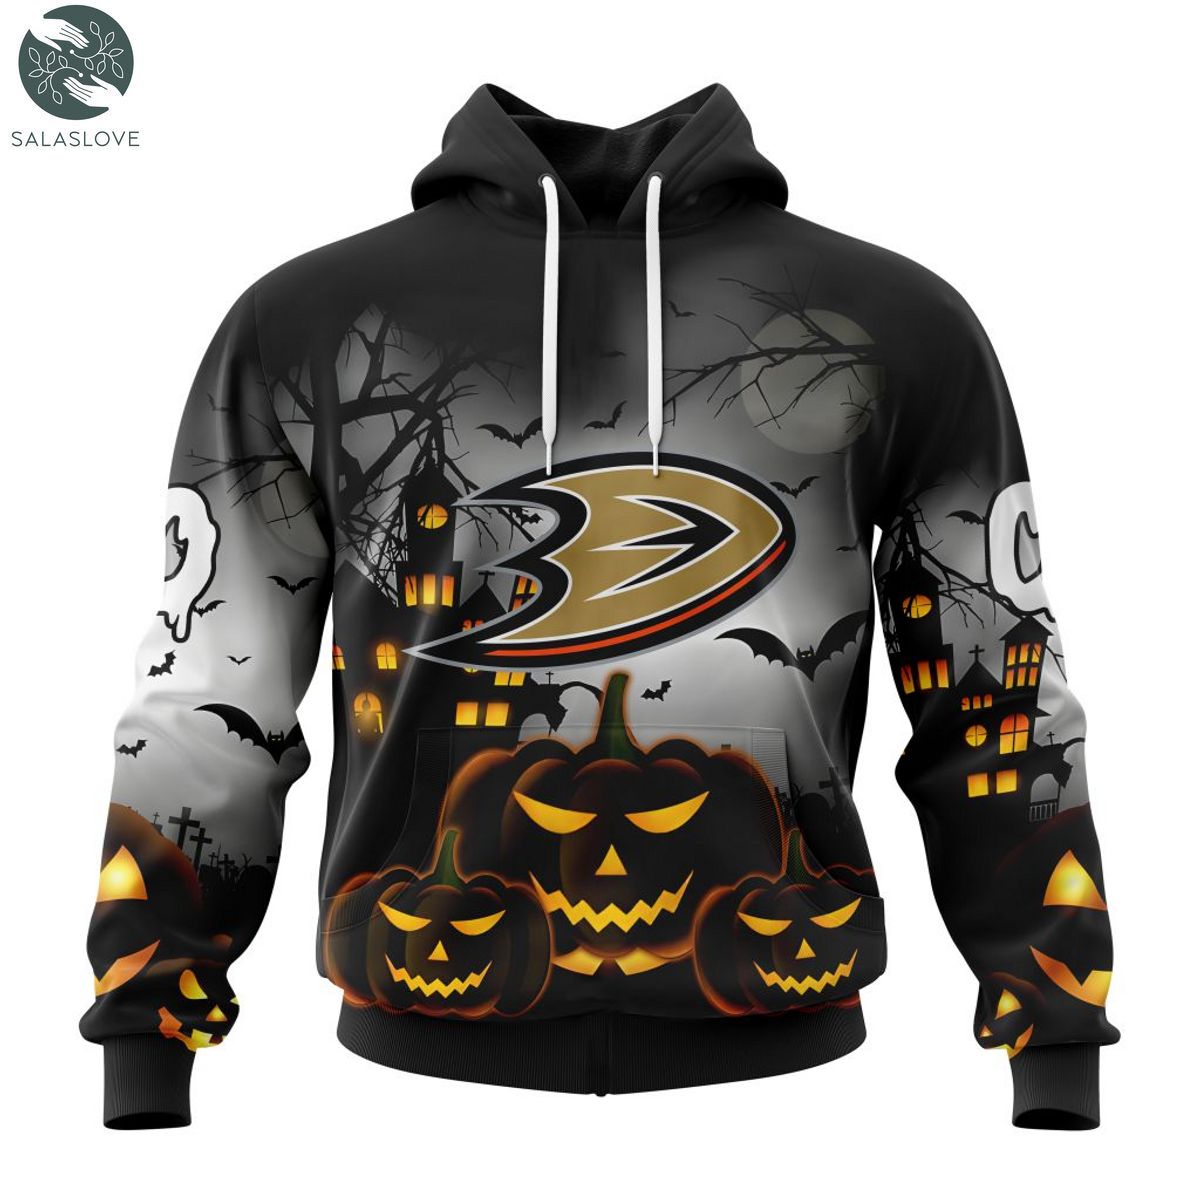 Anaheim Ducks Hoodie 3D cartoon graphic Sweatshirt for fan -Jack sport shop